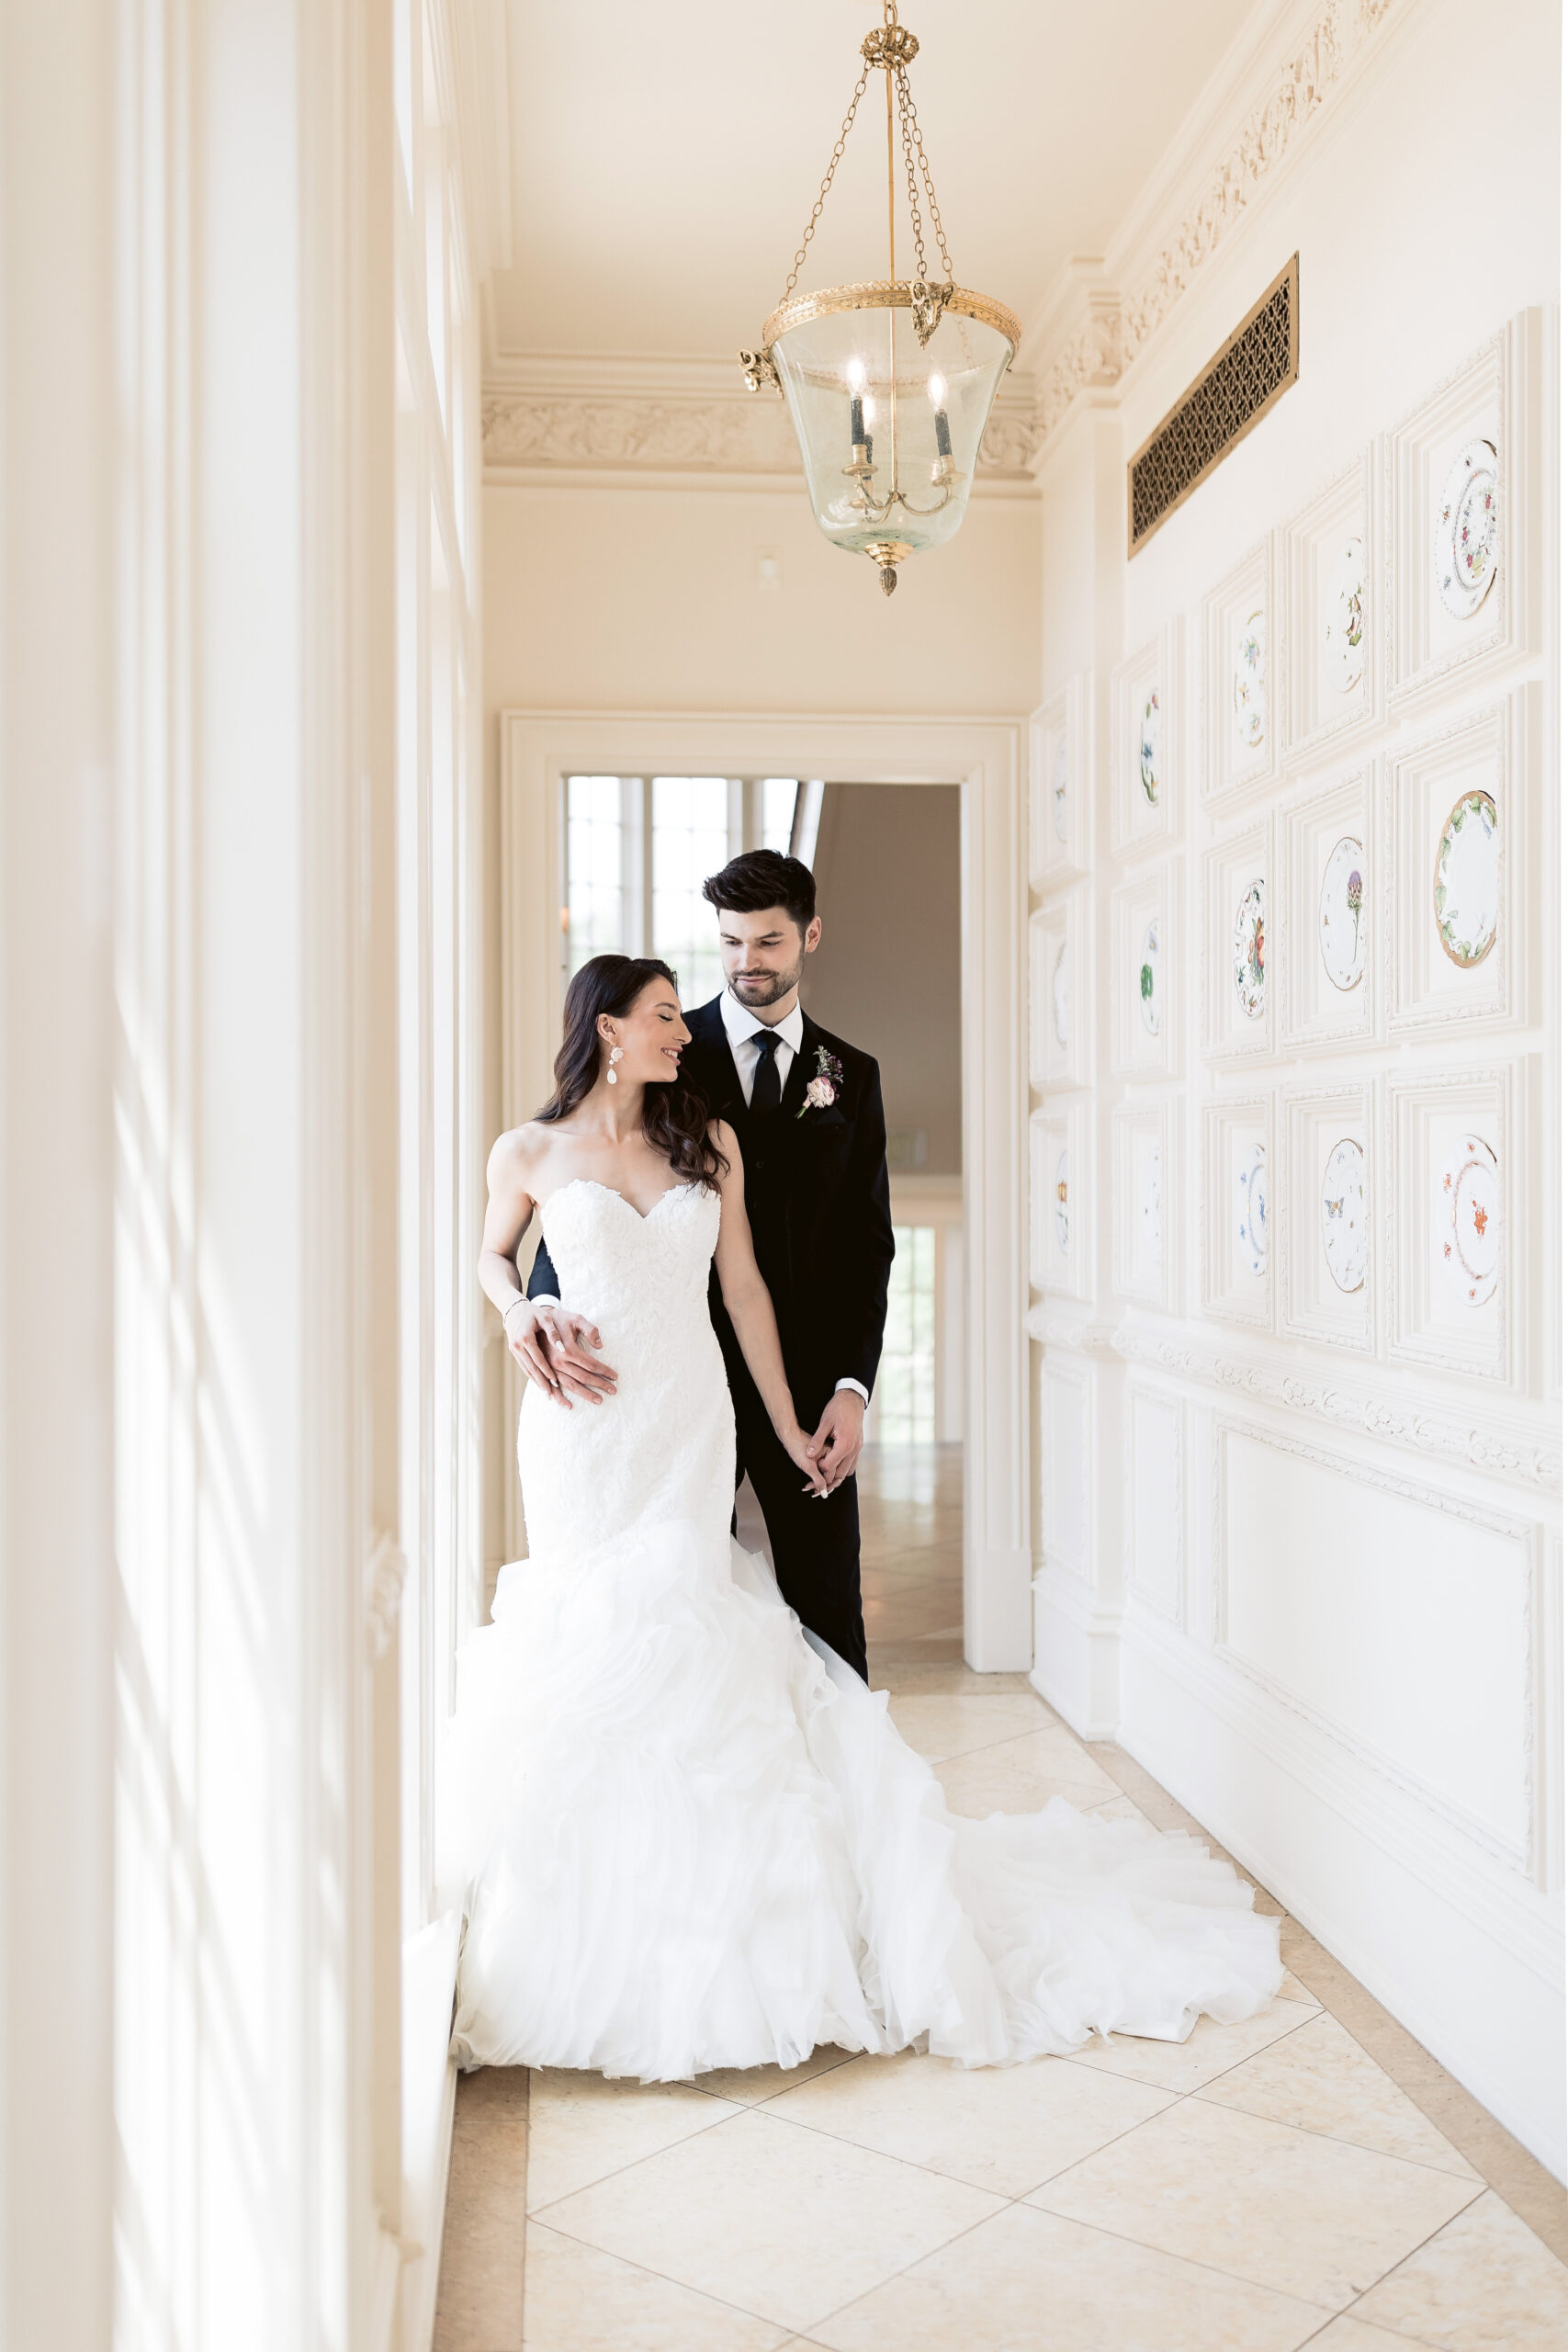 Bride and groom portrait modern and elegant wedding venue photography by Tatyana Zadorin